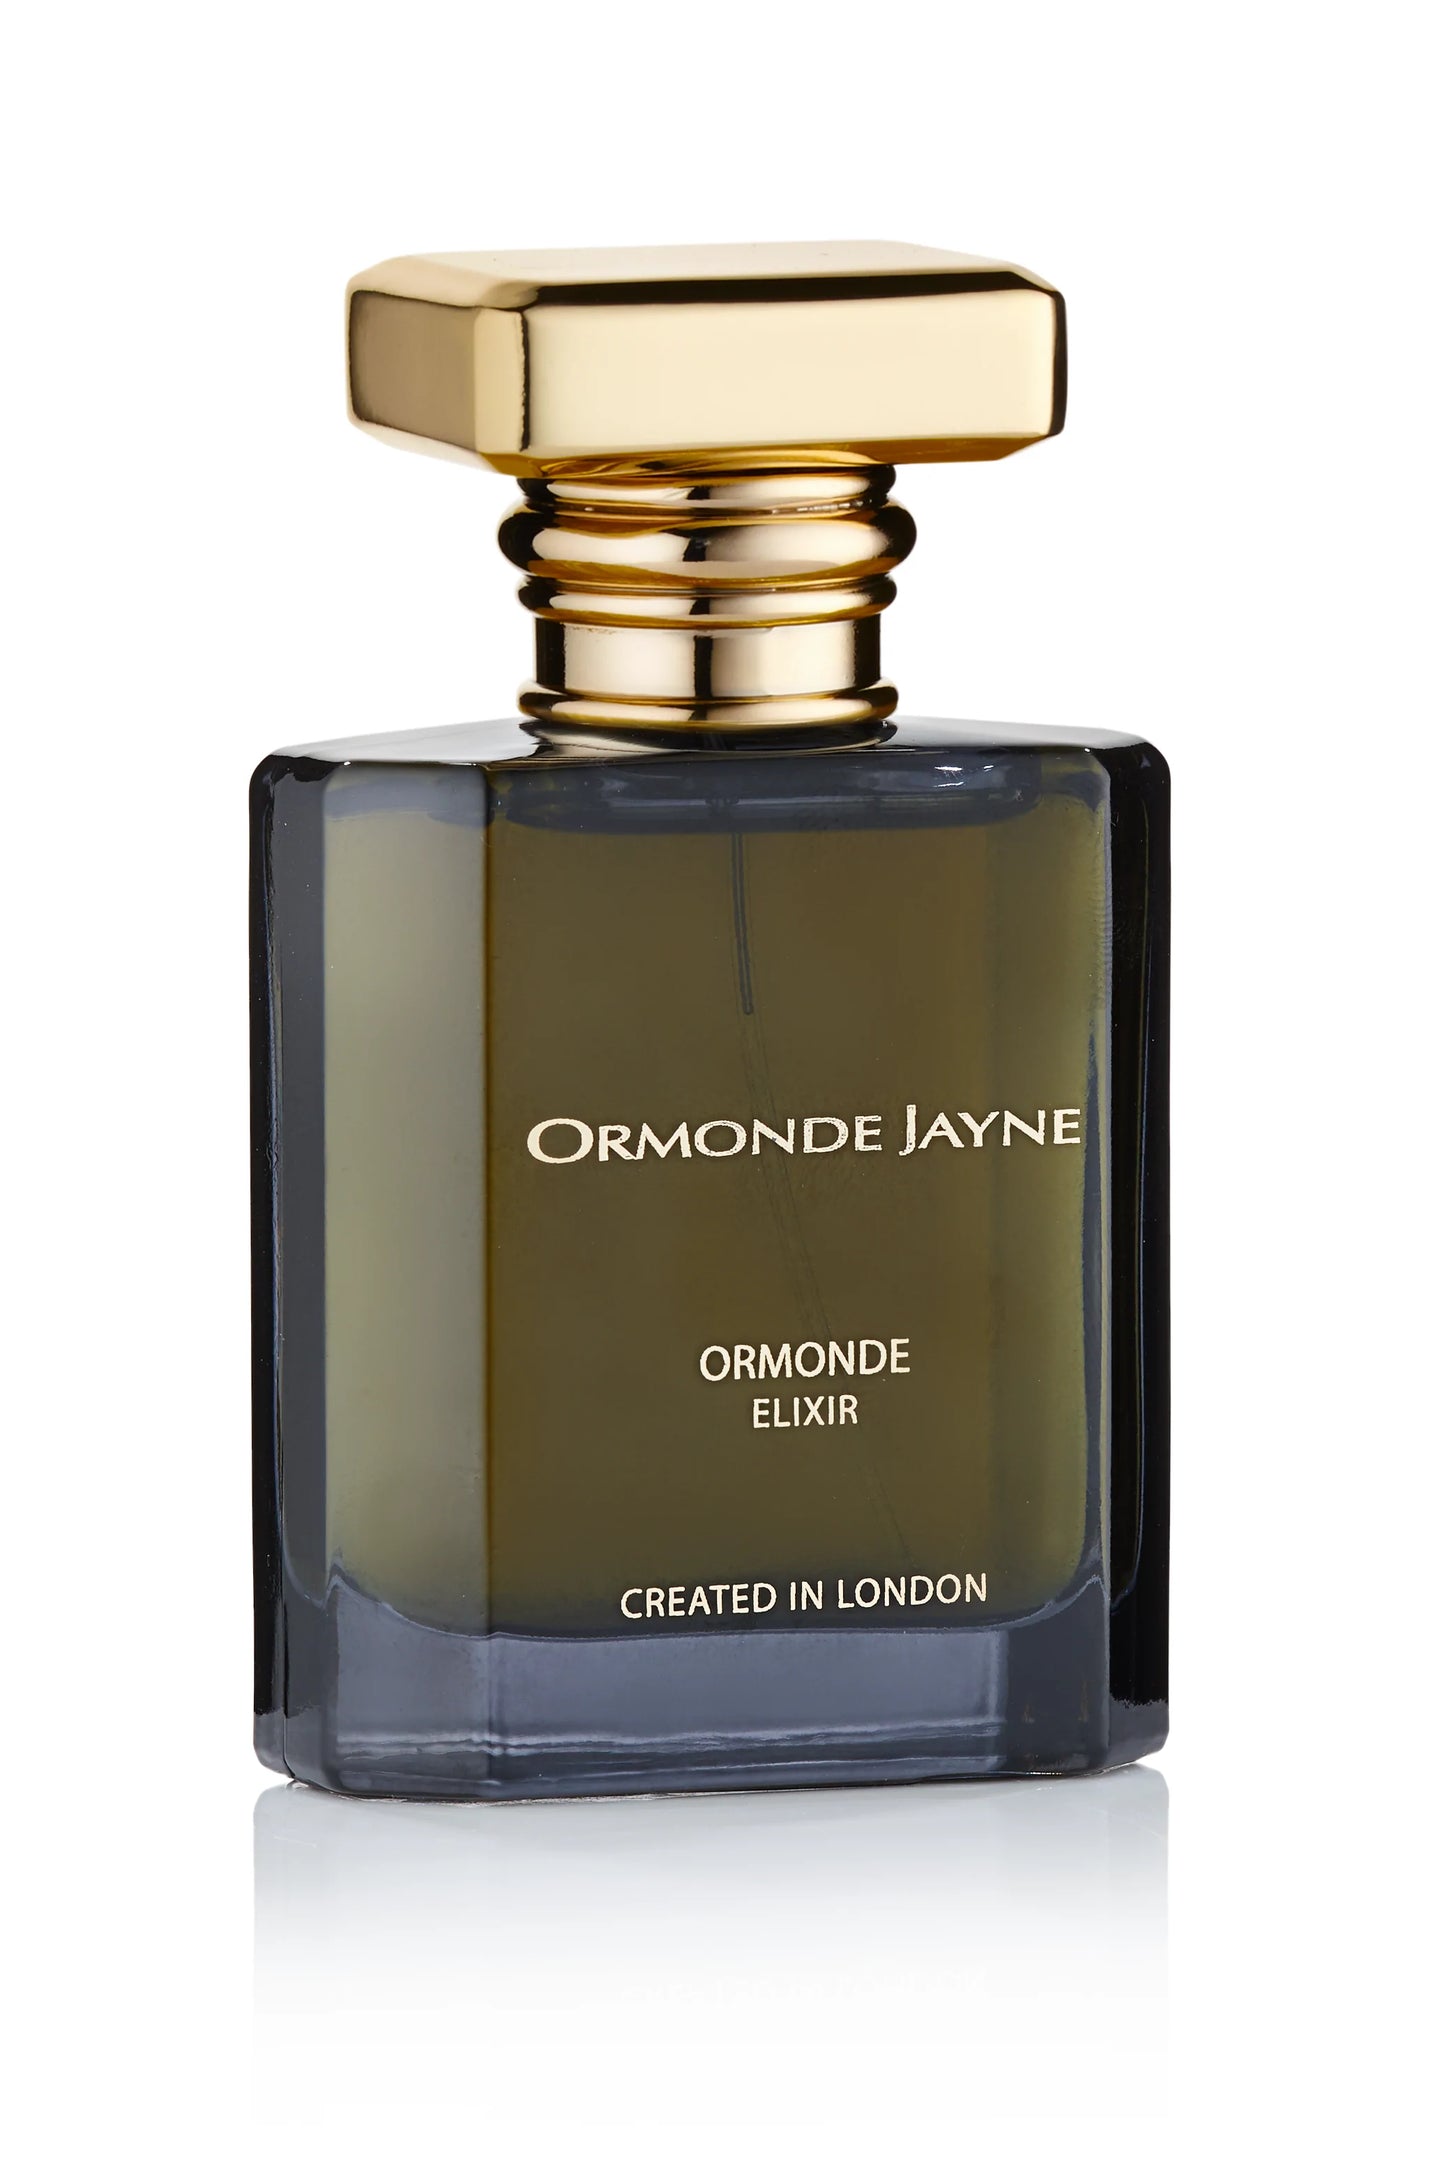 Ormonde Jayne Ormonde Elixir 2ml 0.06 fl. דגימת ניחוח רשמית של עוז